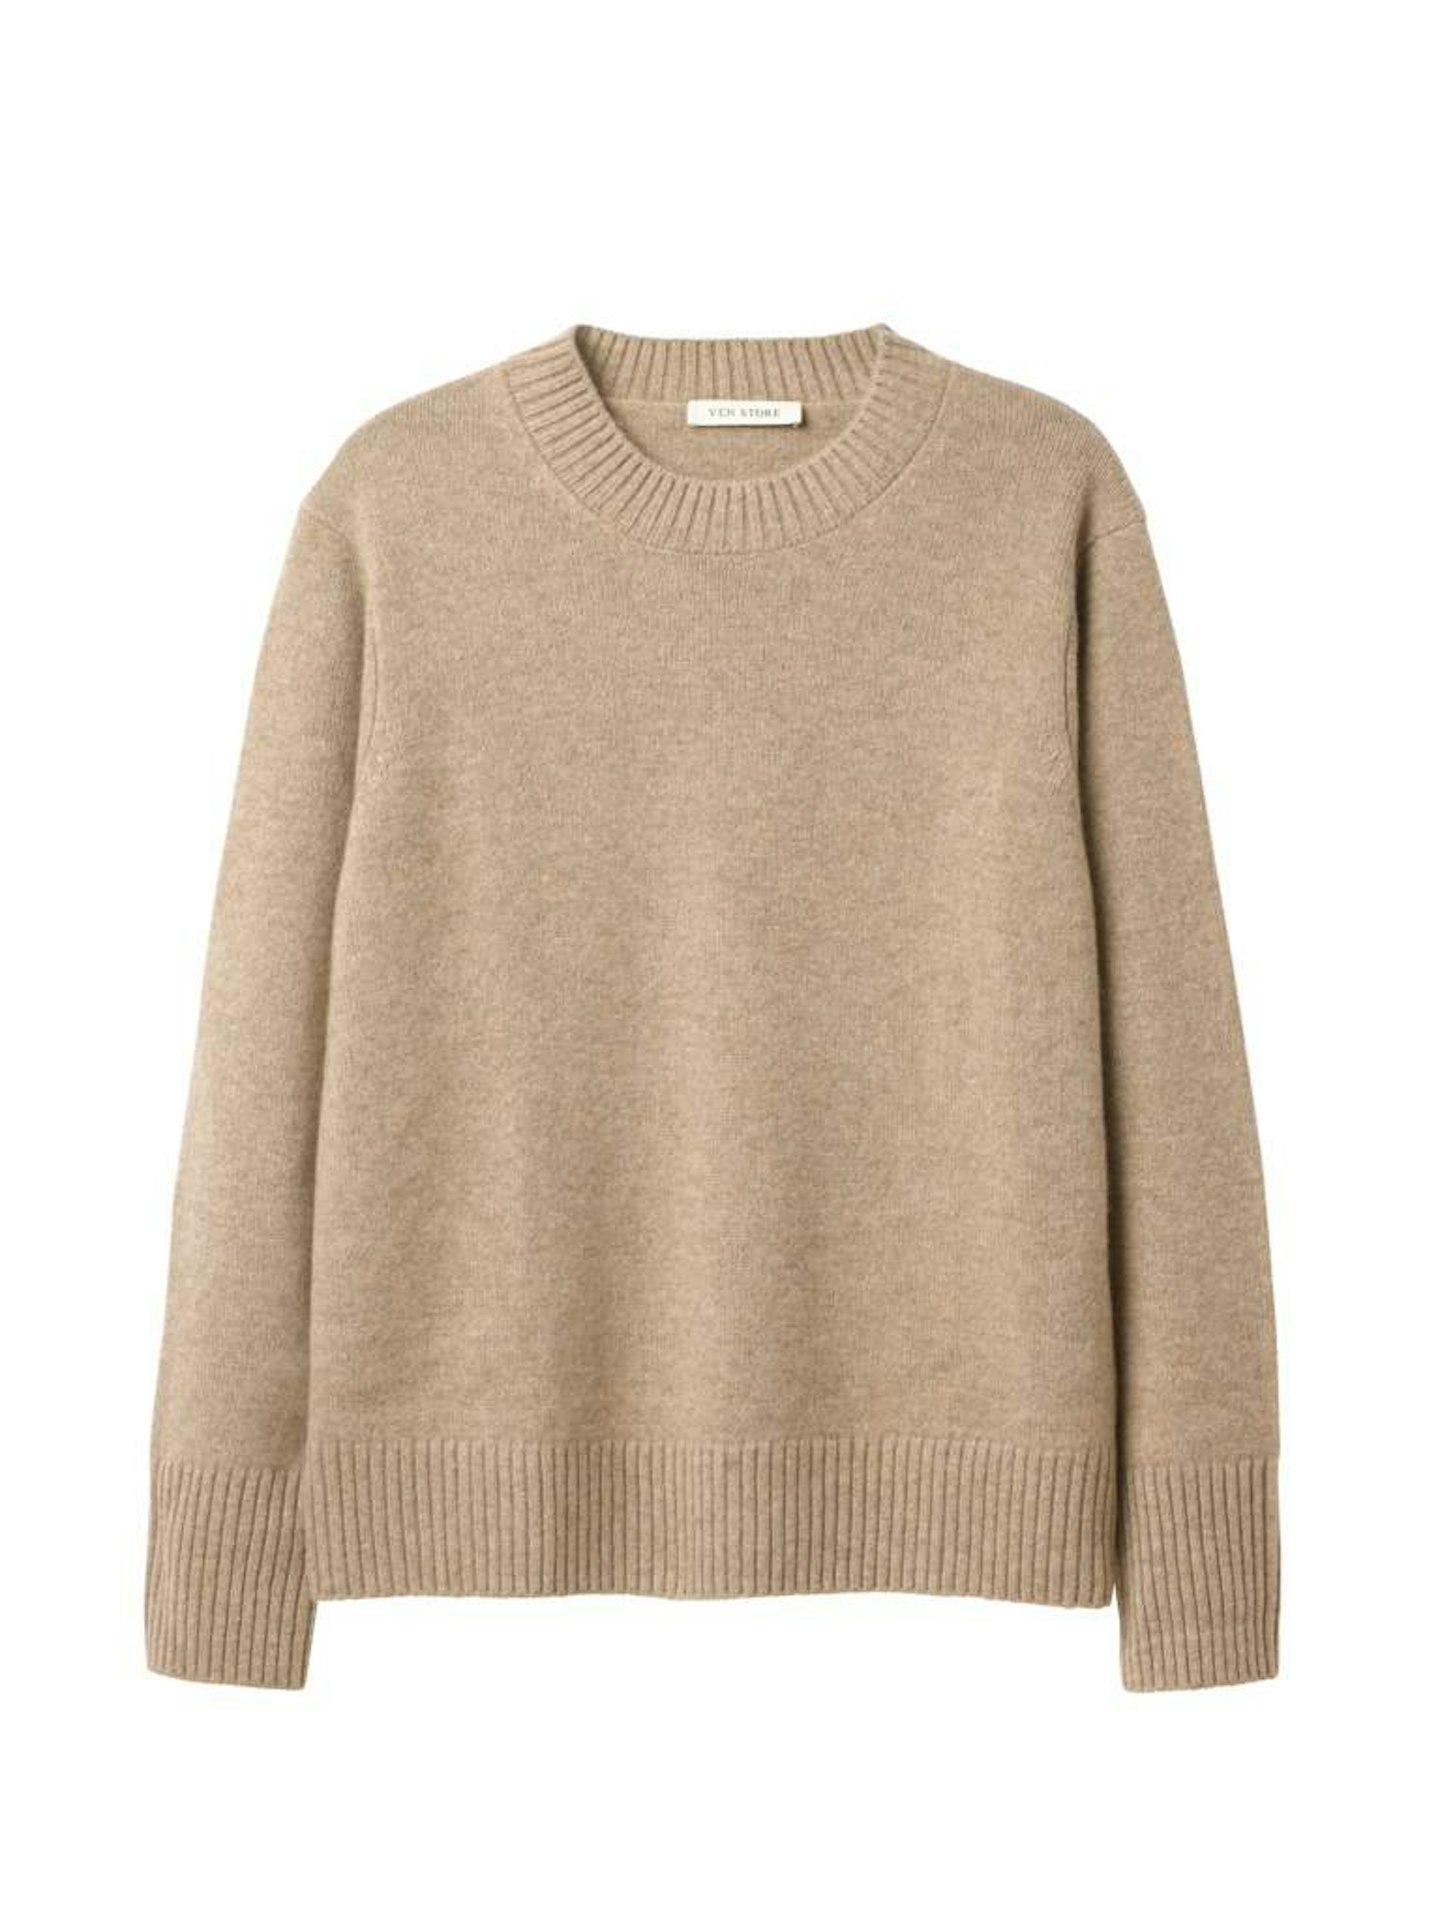 Ven Store, Cashmere sweater beige, £210